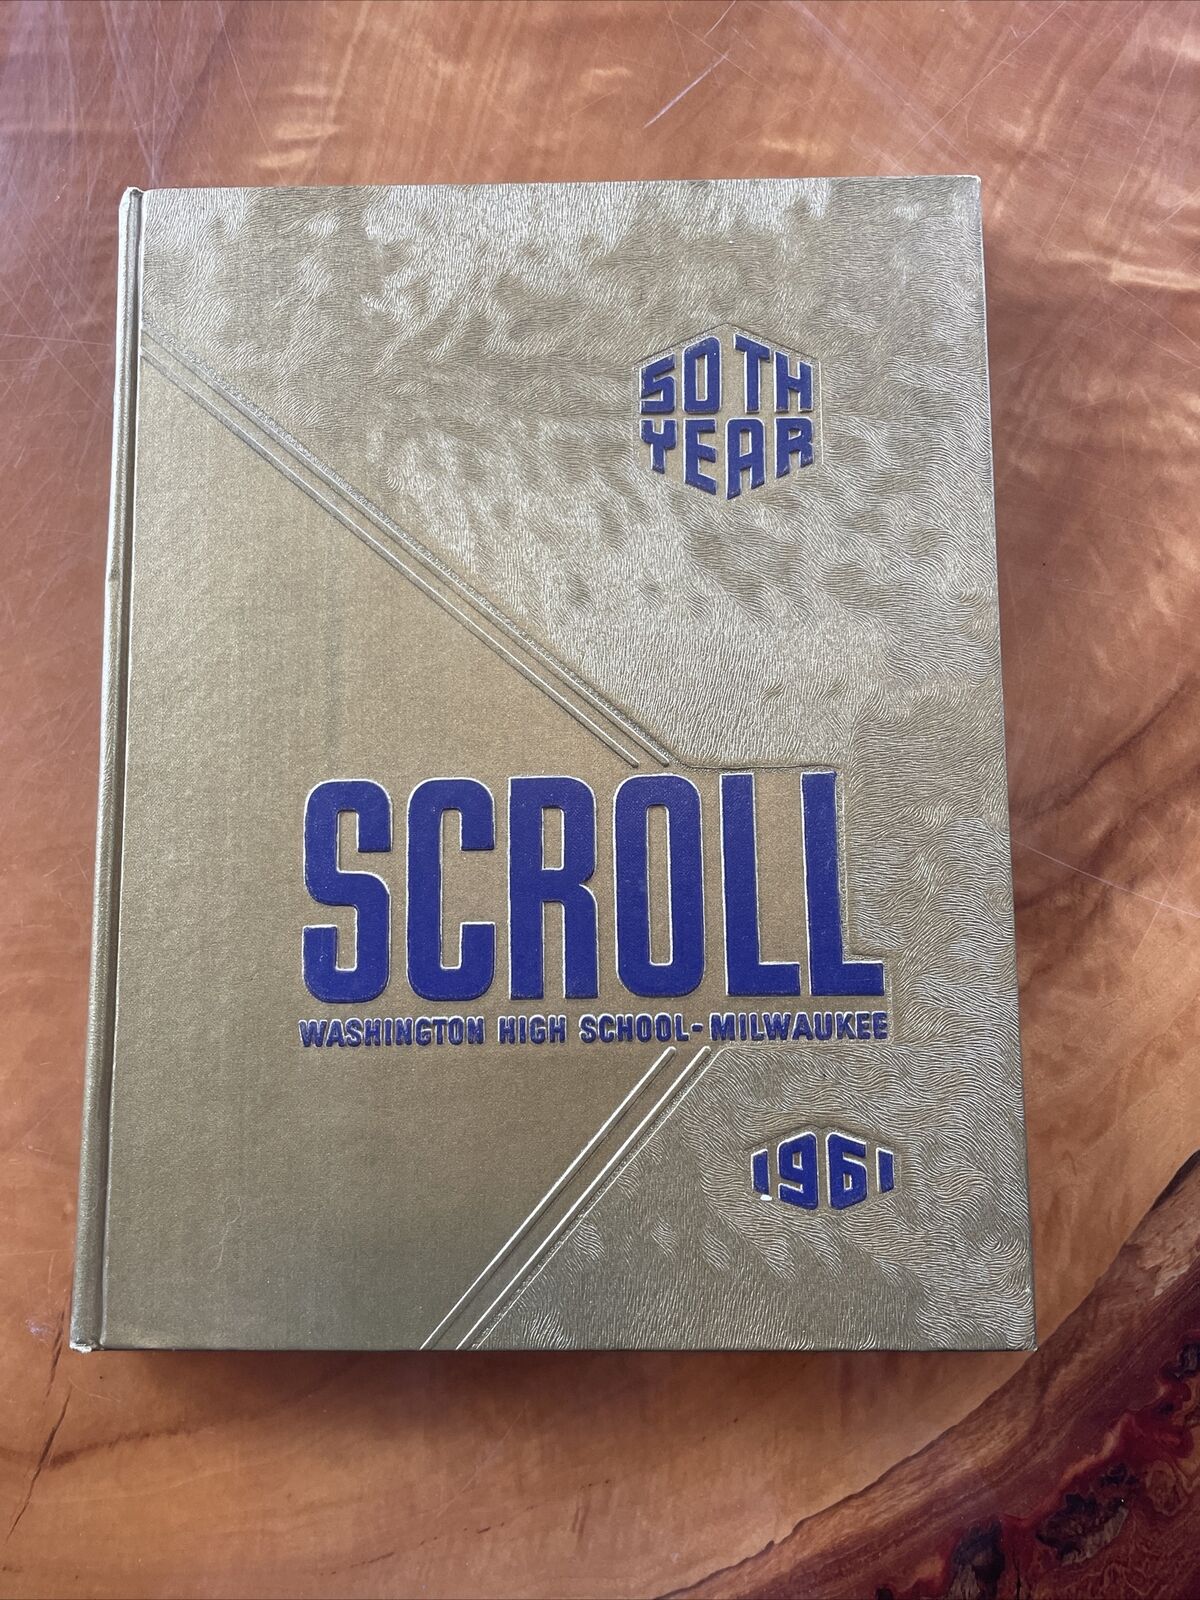 1961 Scroll Washington High School Milwaukee 50th Year Yearbook